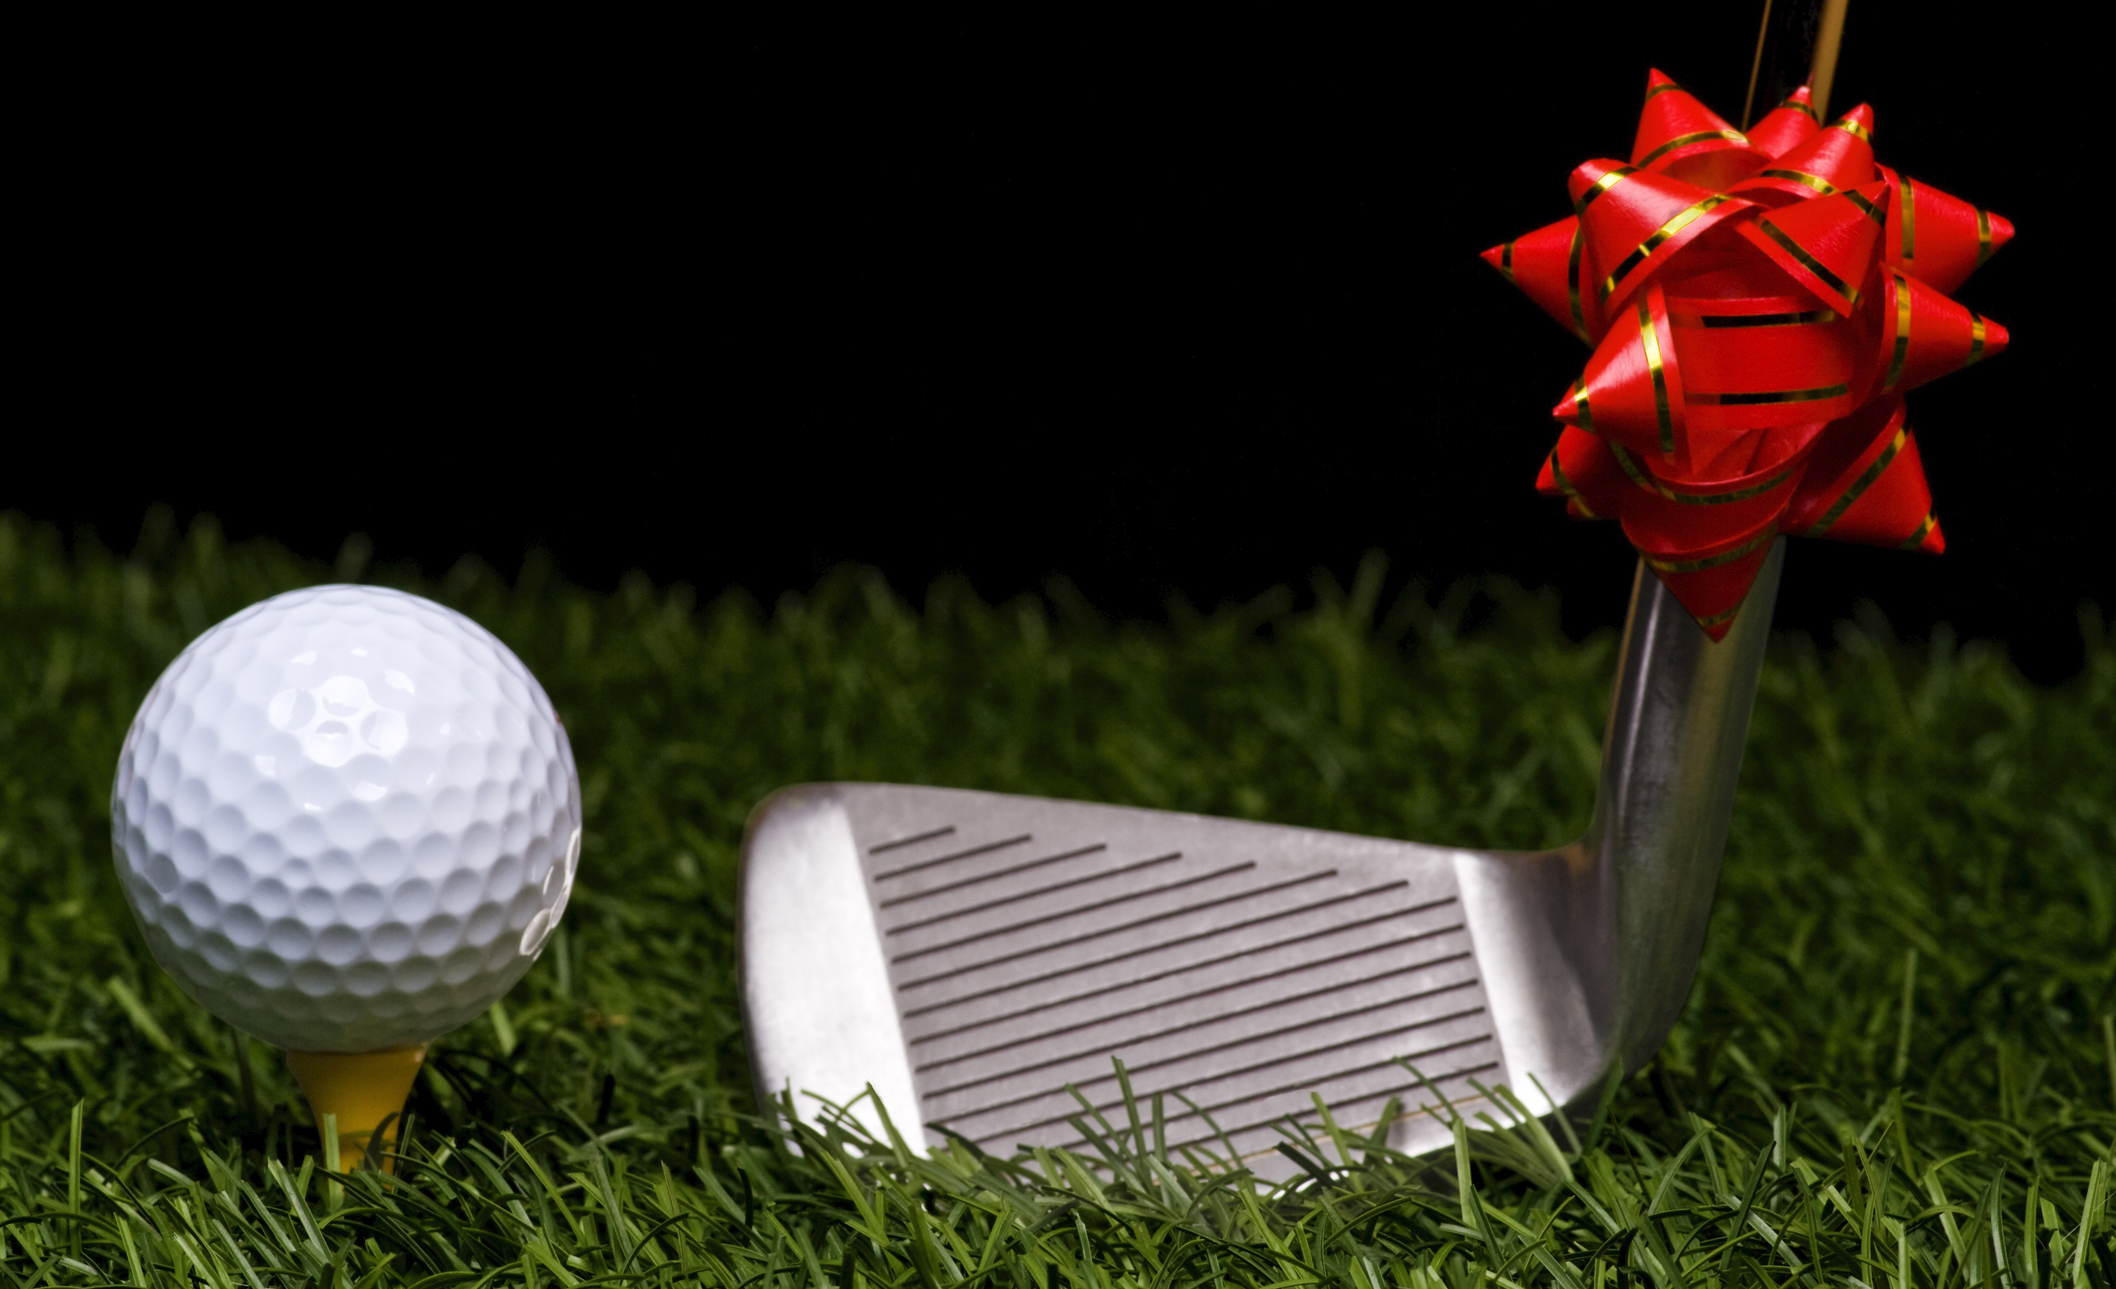 Golf Lover Gift Ideas